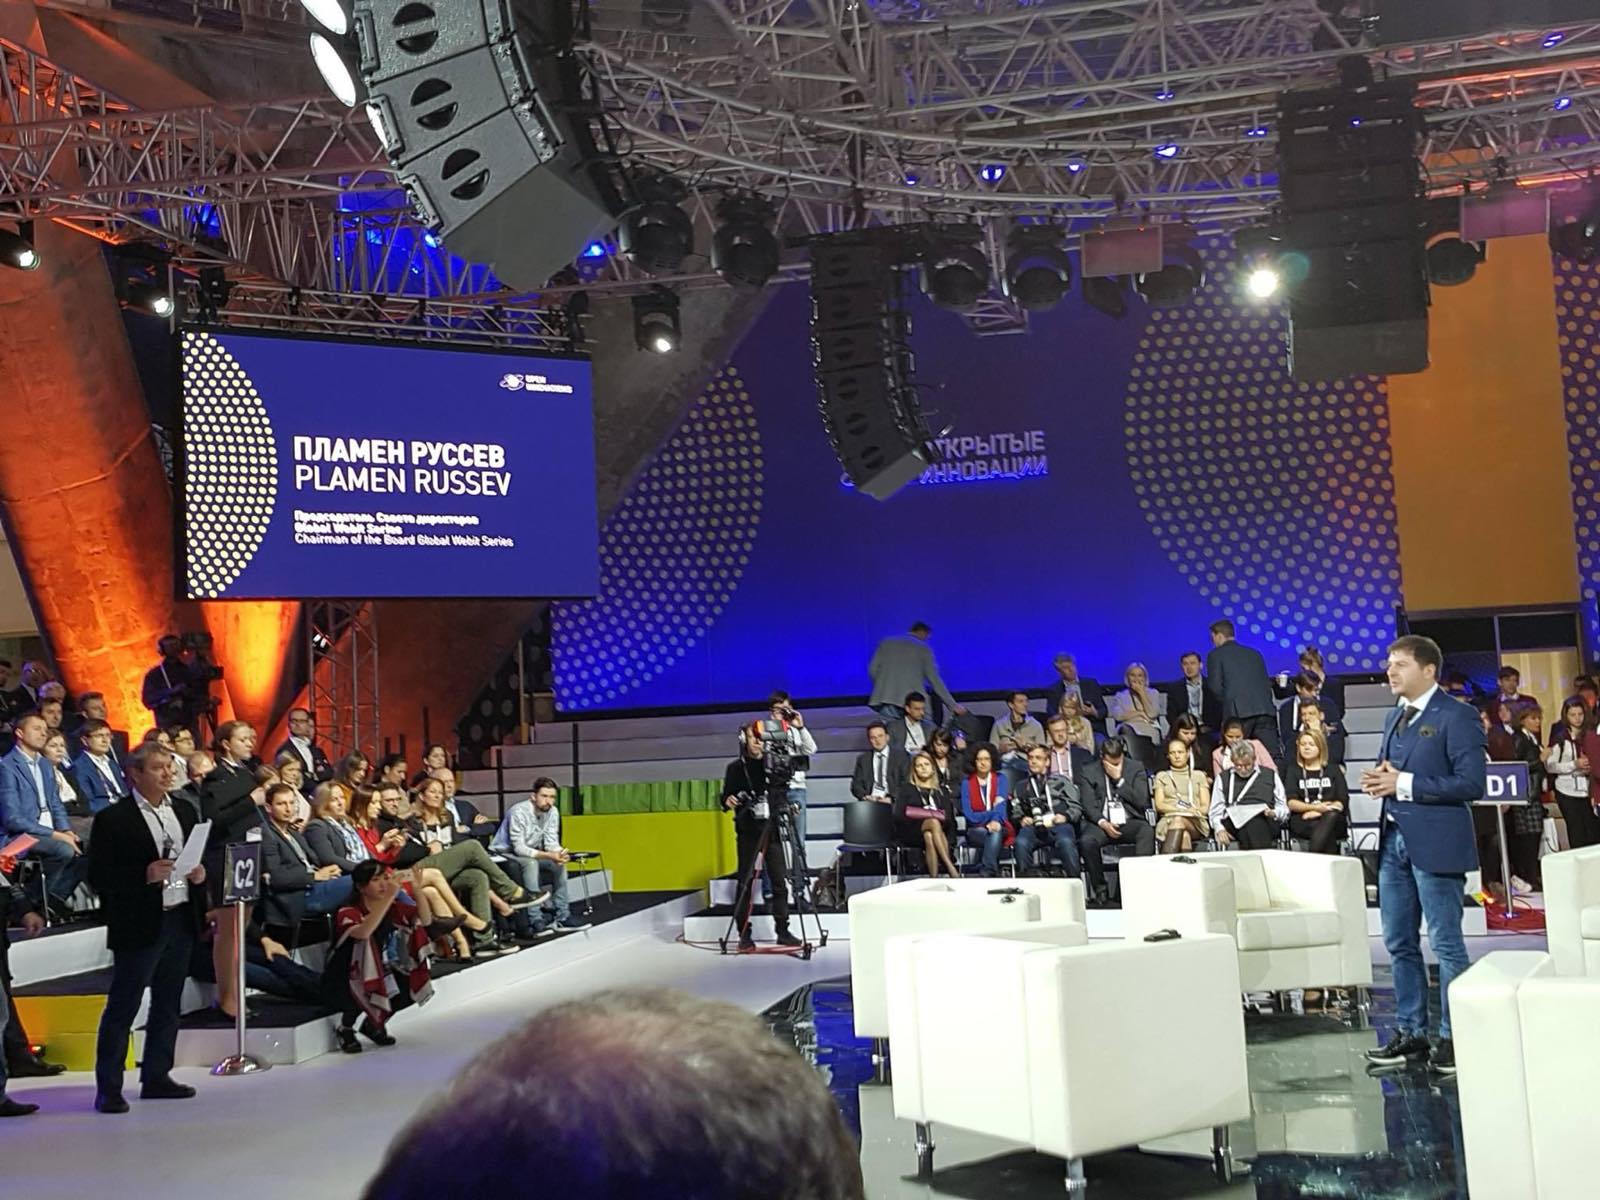 Plamen Russev keynoting the Open Innovations Forum